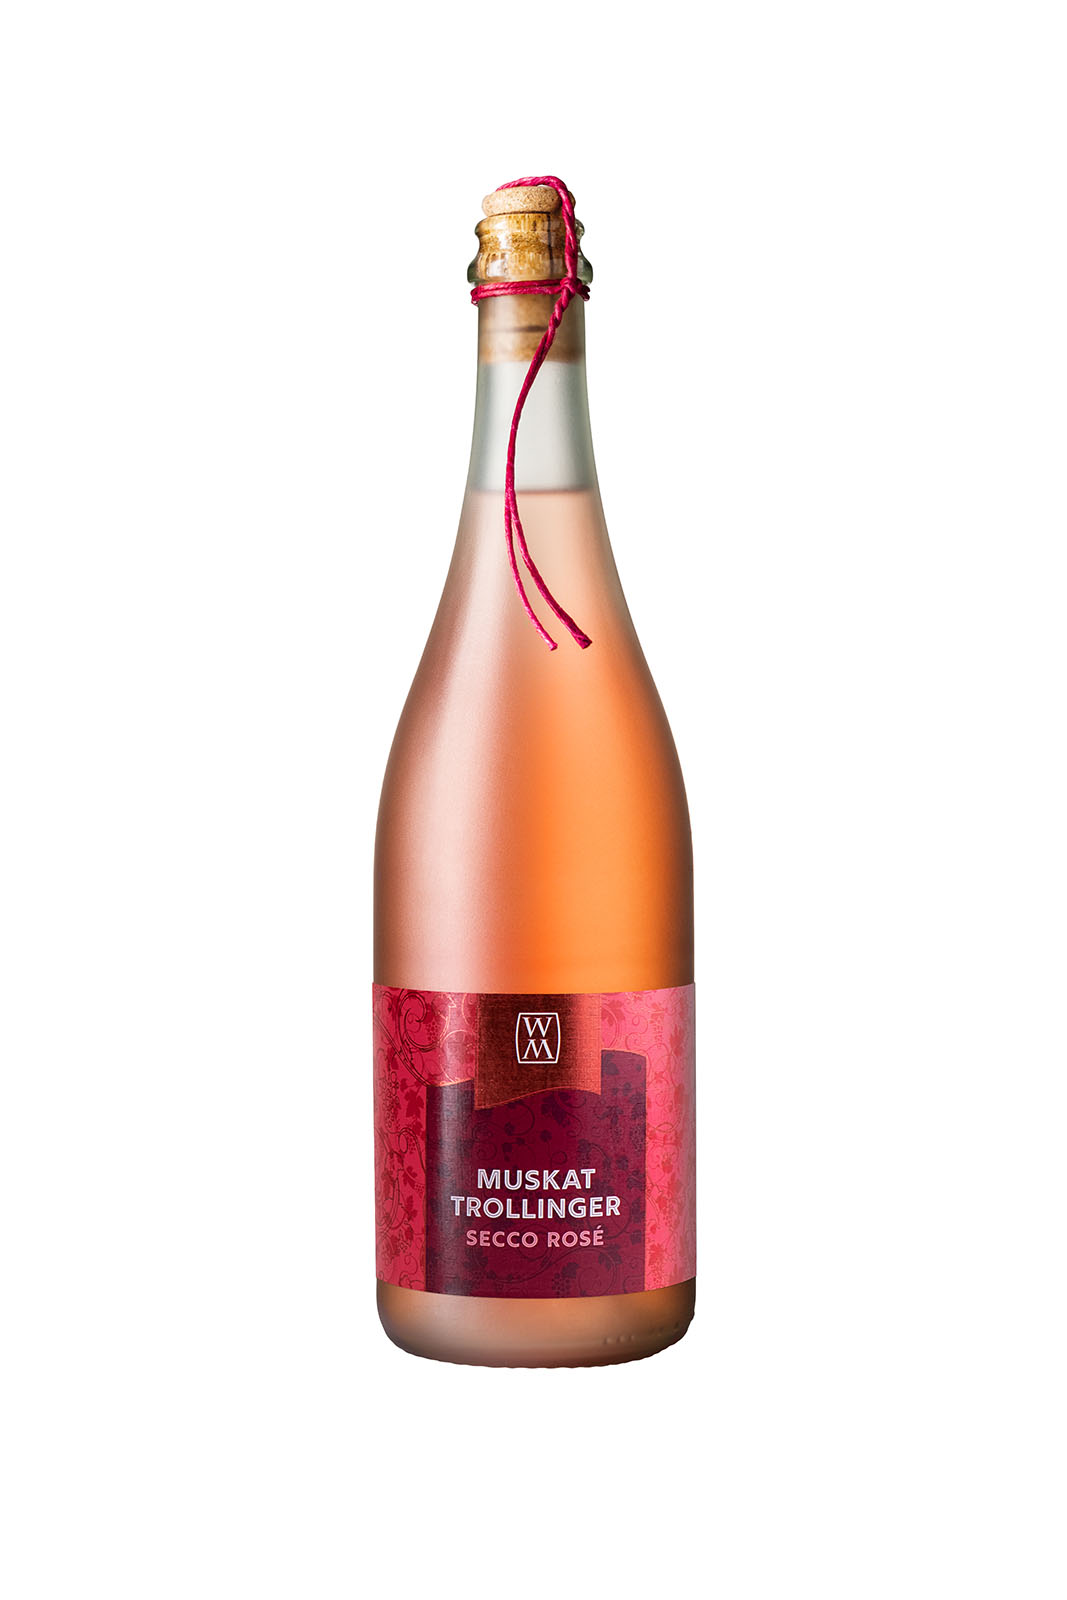 Weingärtner Marbach Muskat-Trollinger Secco Rosé 0,75 L Perlwein, Württemberger Wein